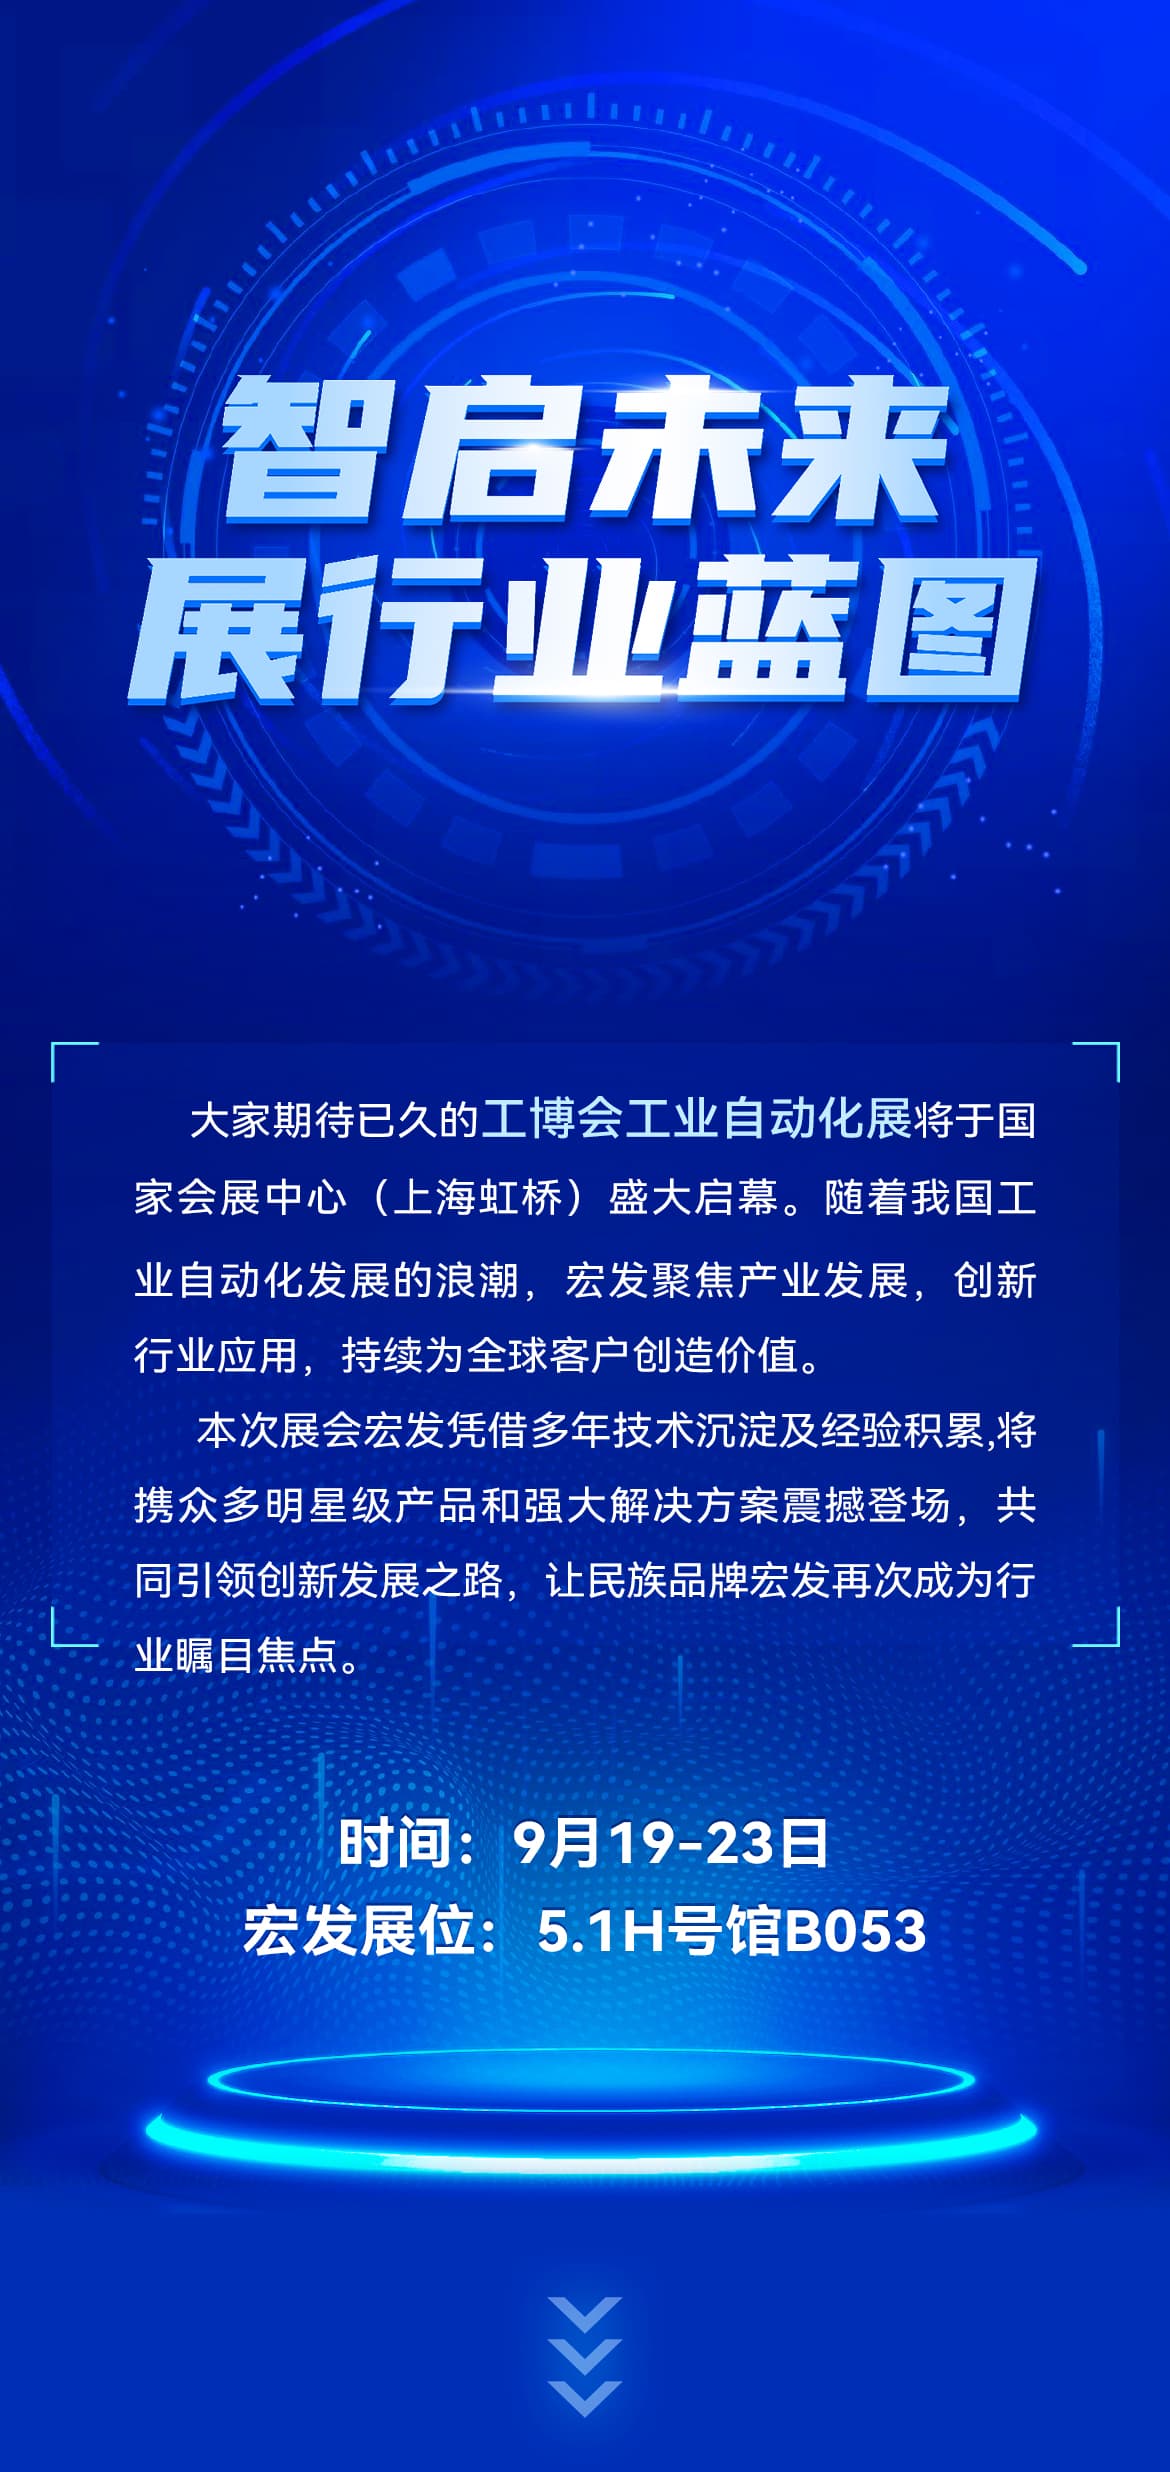 5.1H號館B053|Kaiyun上海工業自動化展勢能全開